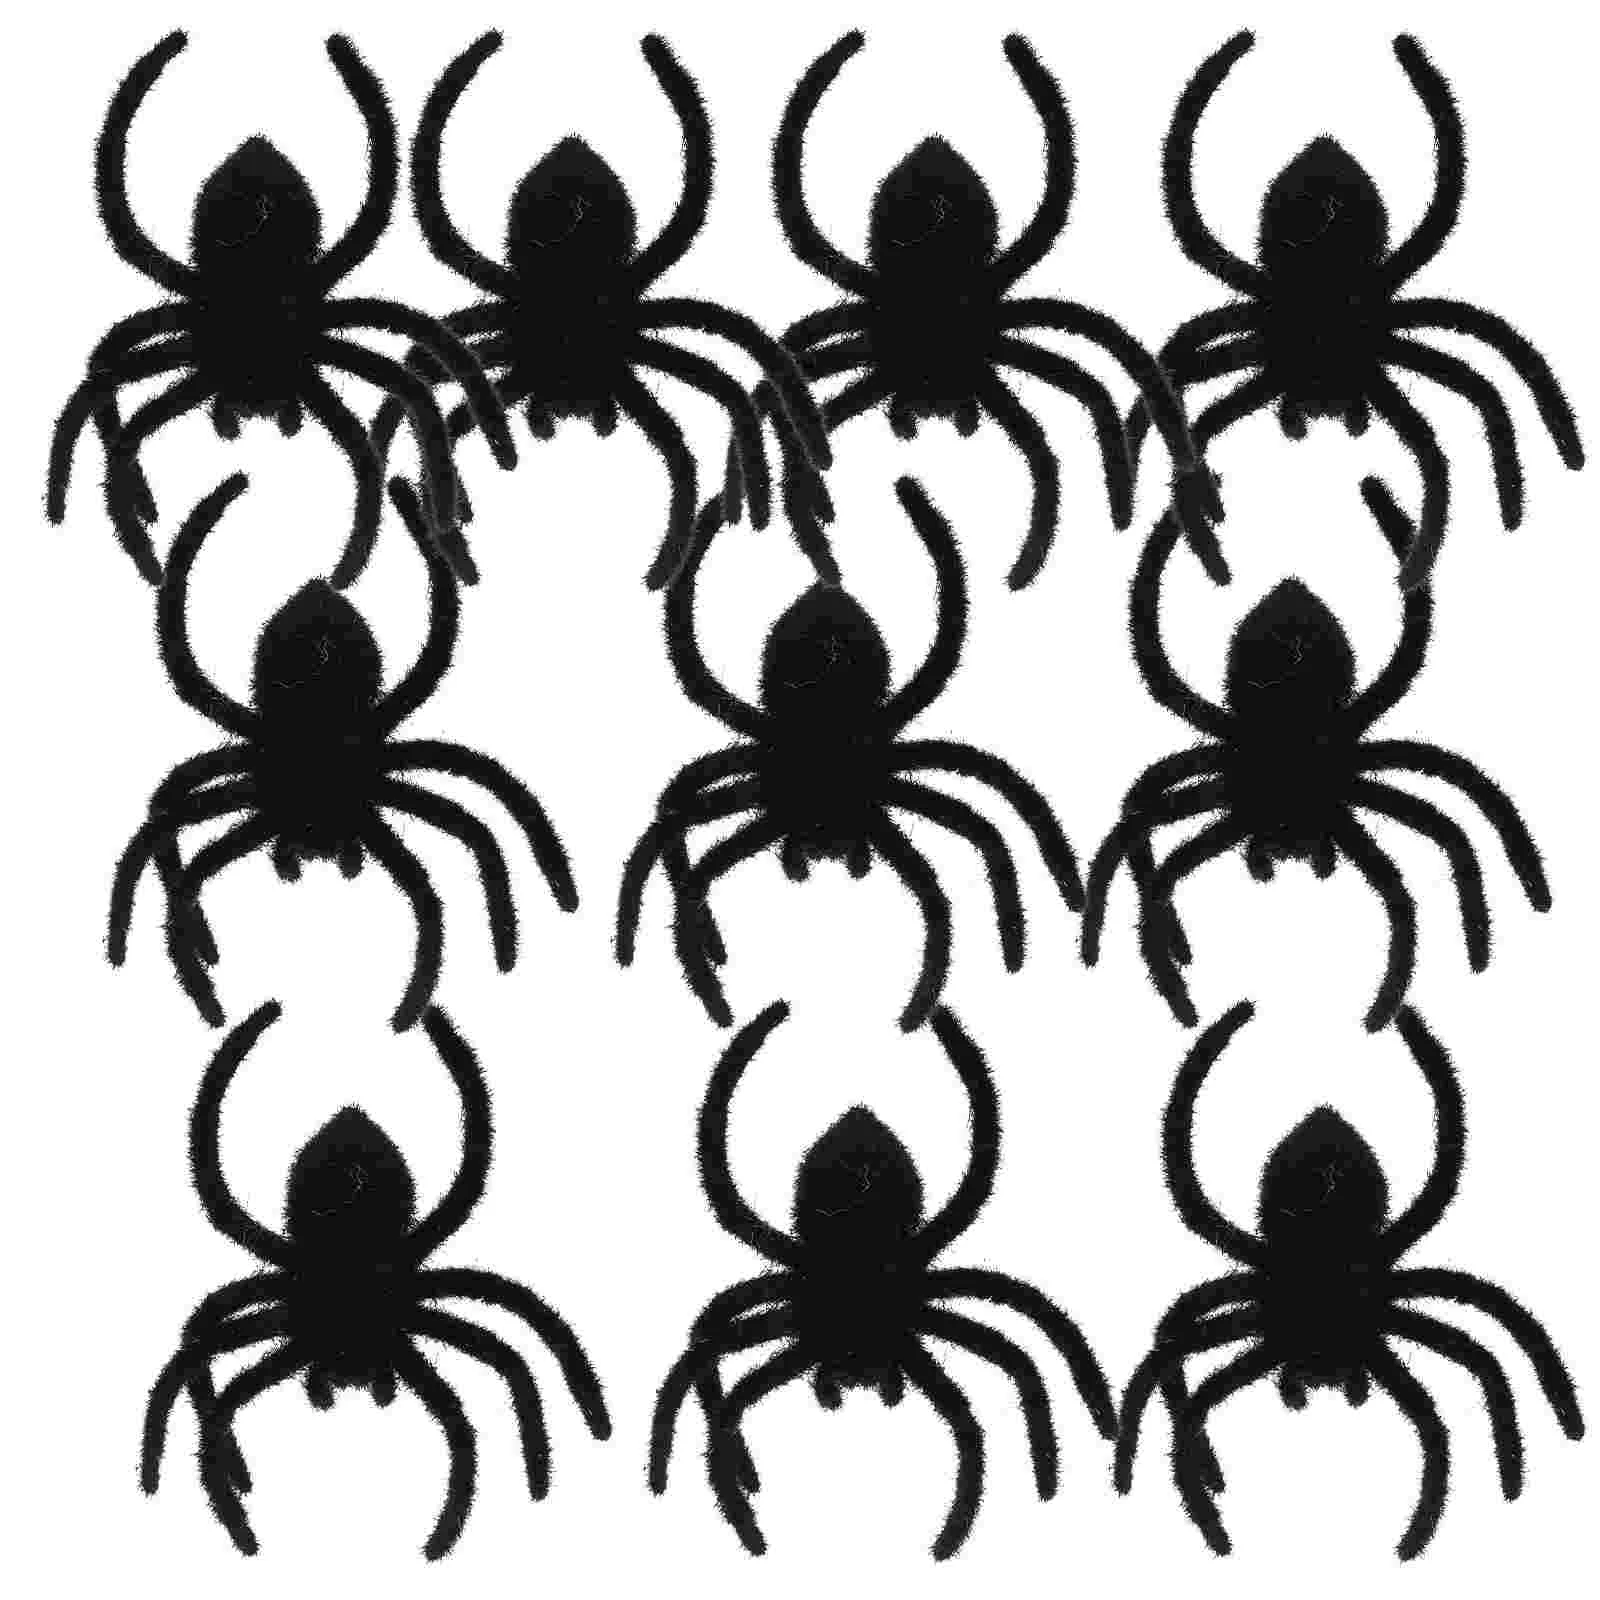 

10 Pcs Big Spider Decorative Props Festival Prank Toy Decoration Flocking Halloween Ornament Simulated